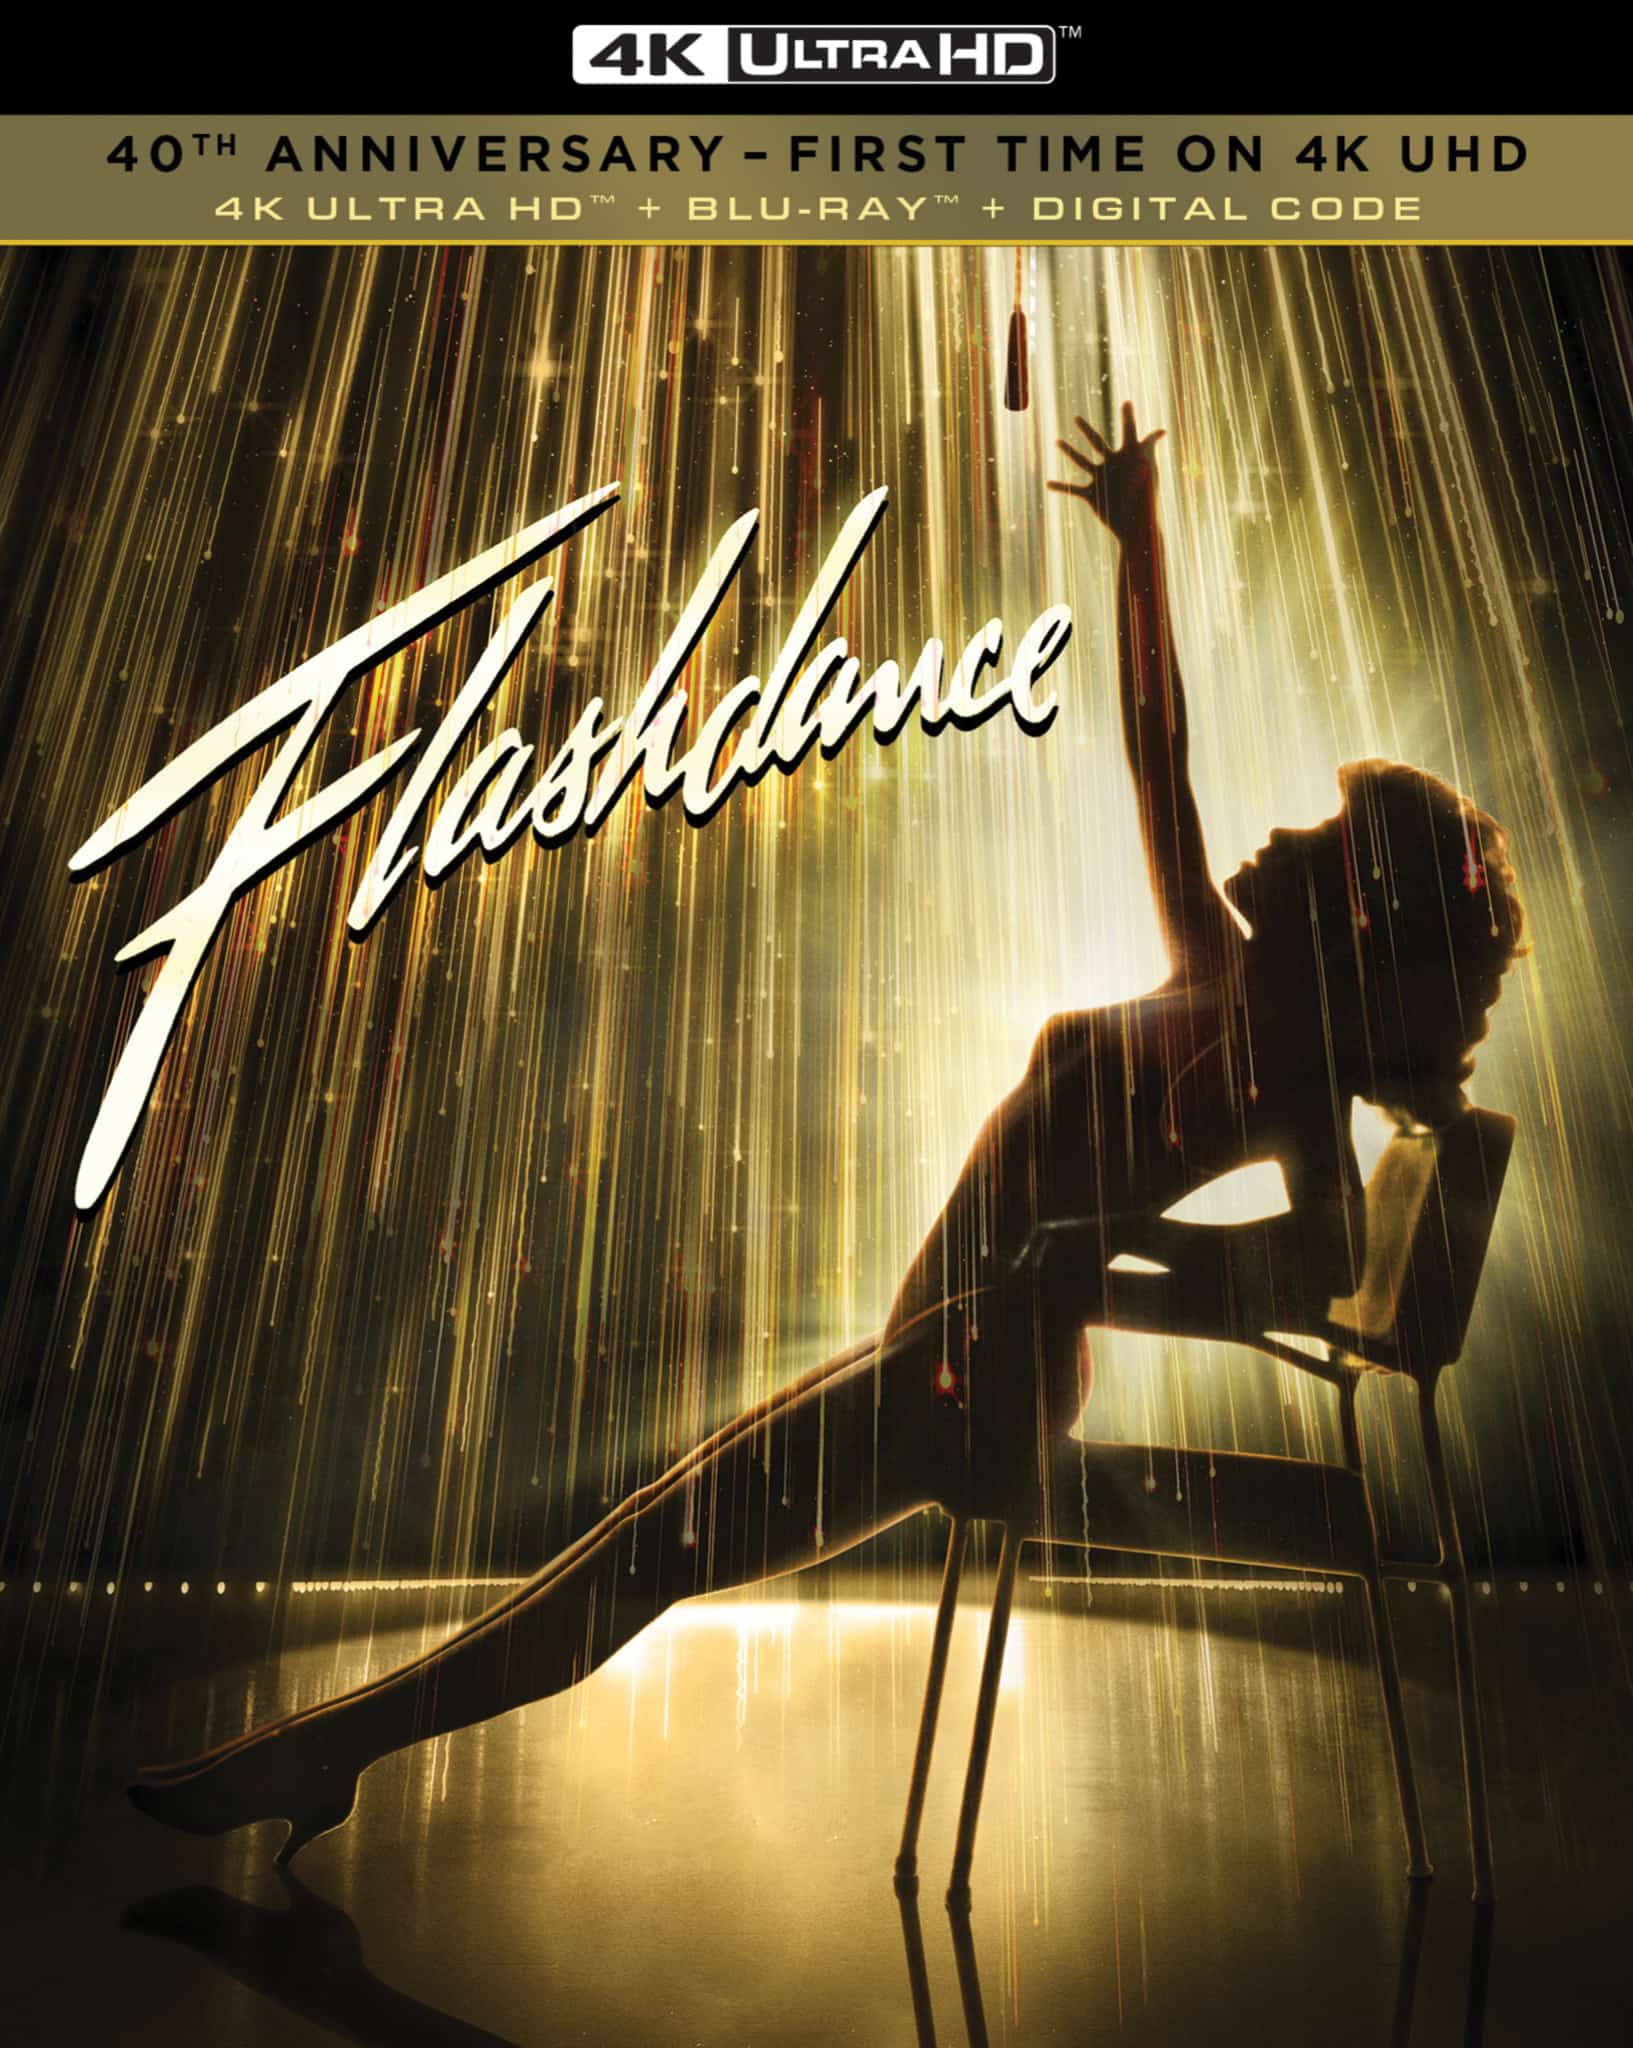 Flashdance celebrates its 40th Anniversary in 4K UHD on April 11th 1